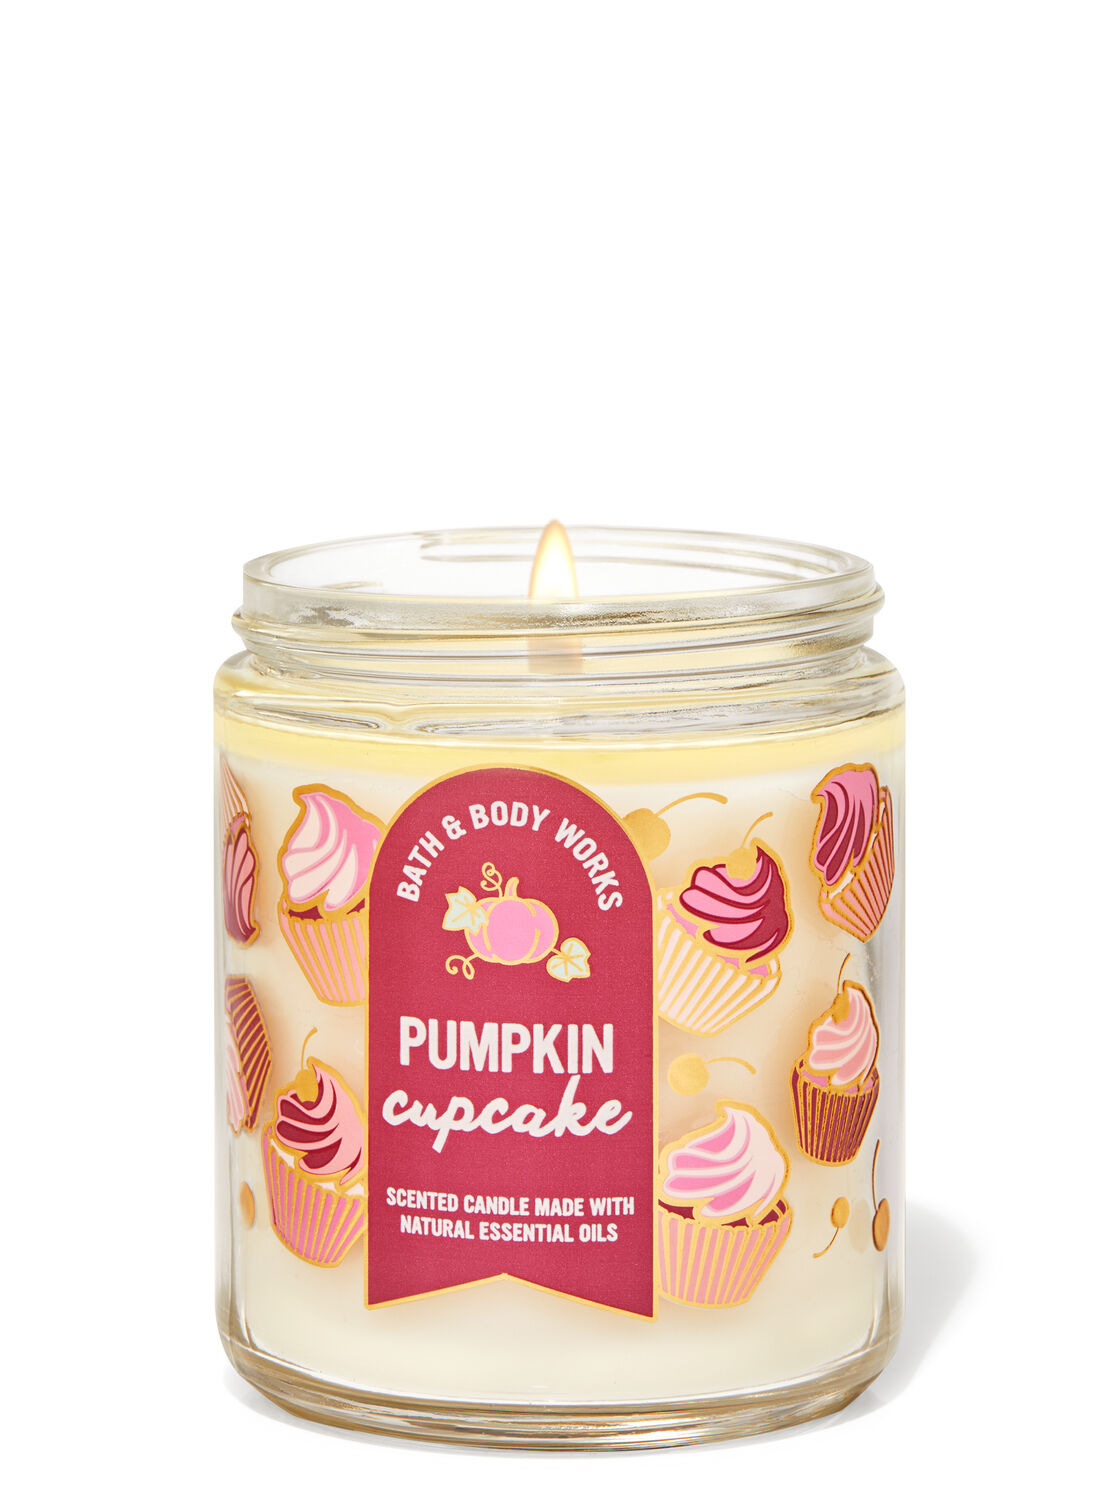 Pumpkin Cupcake Single Wick Candle